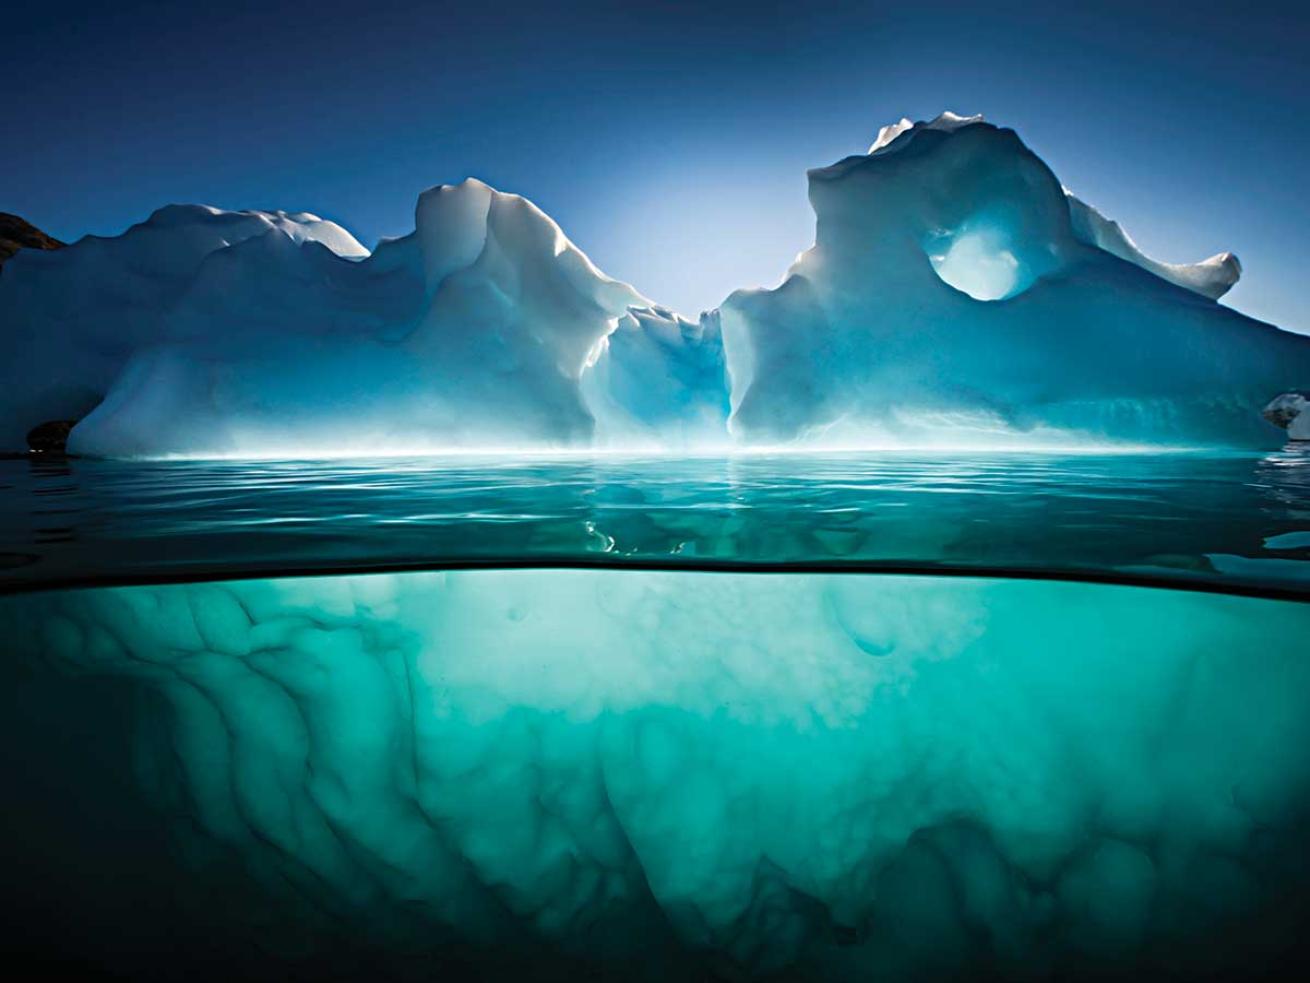 Iceberg in Scoresby Sund